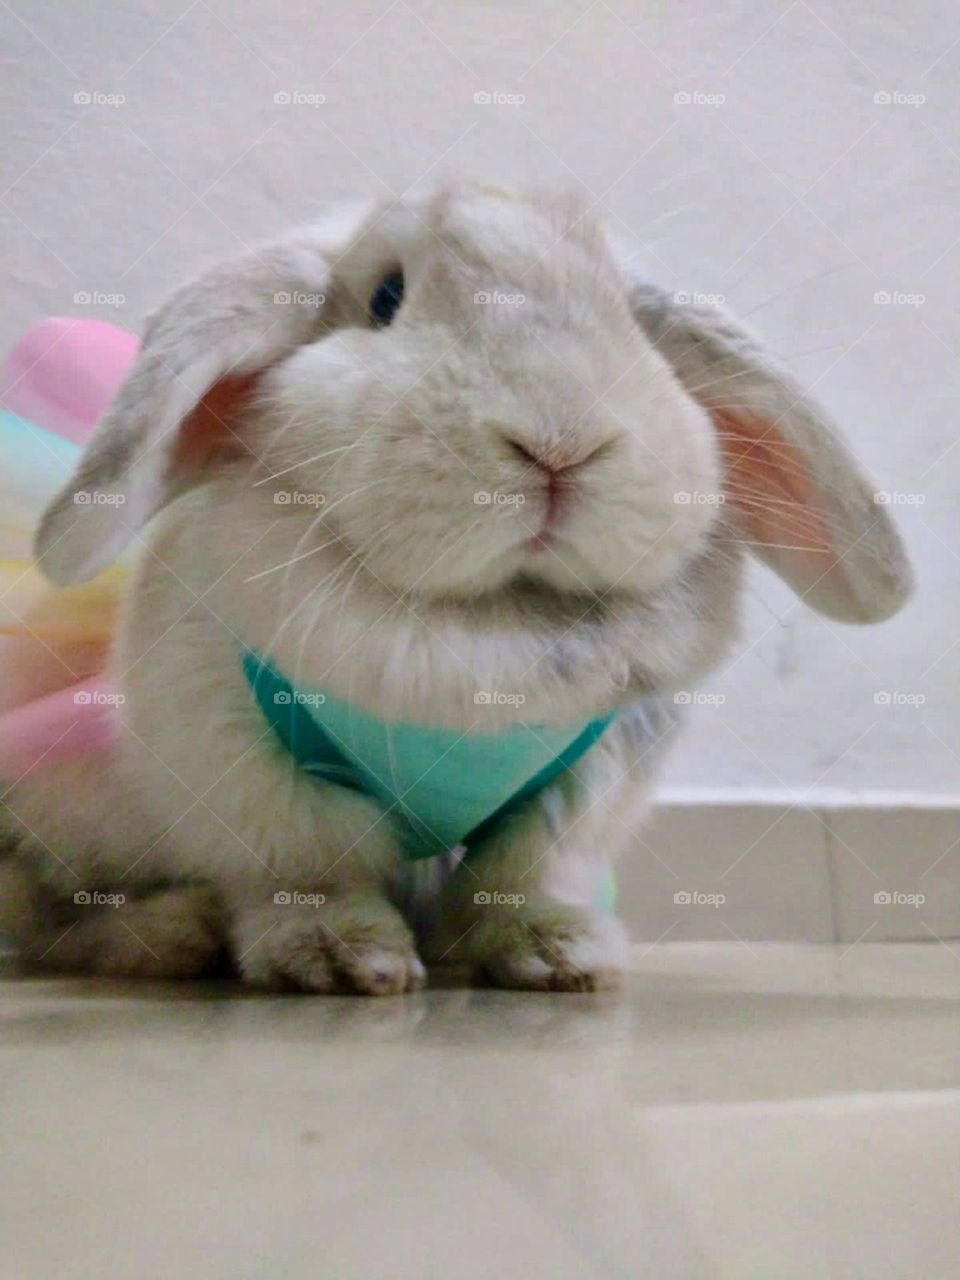 Lady bunny 